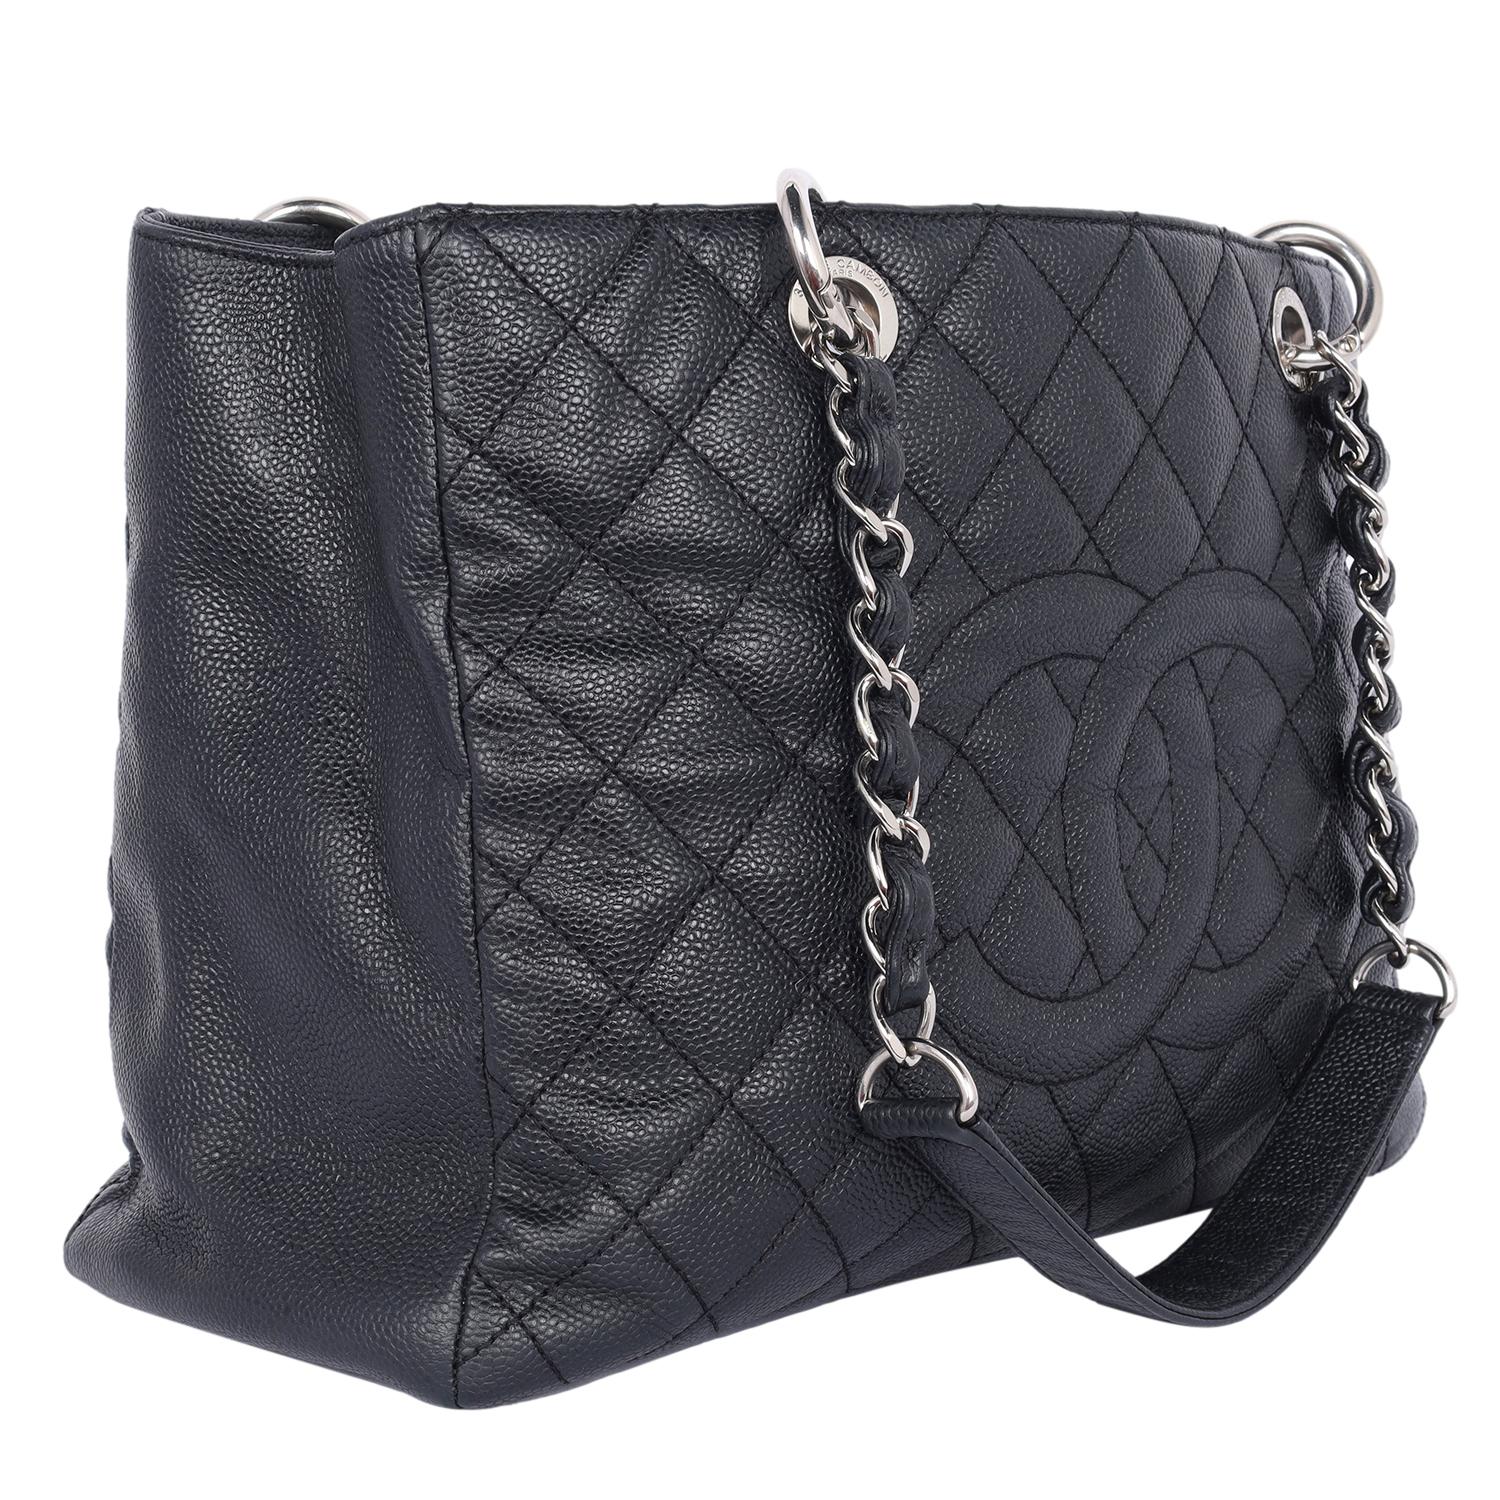 Women's Chanel Caviar Leather Grand Shopping Tote Black